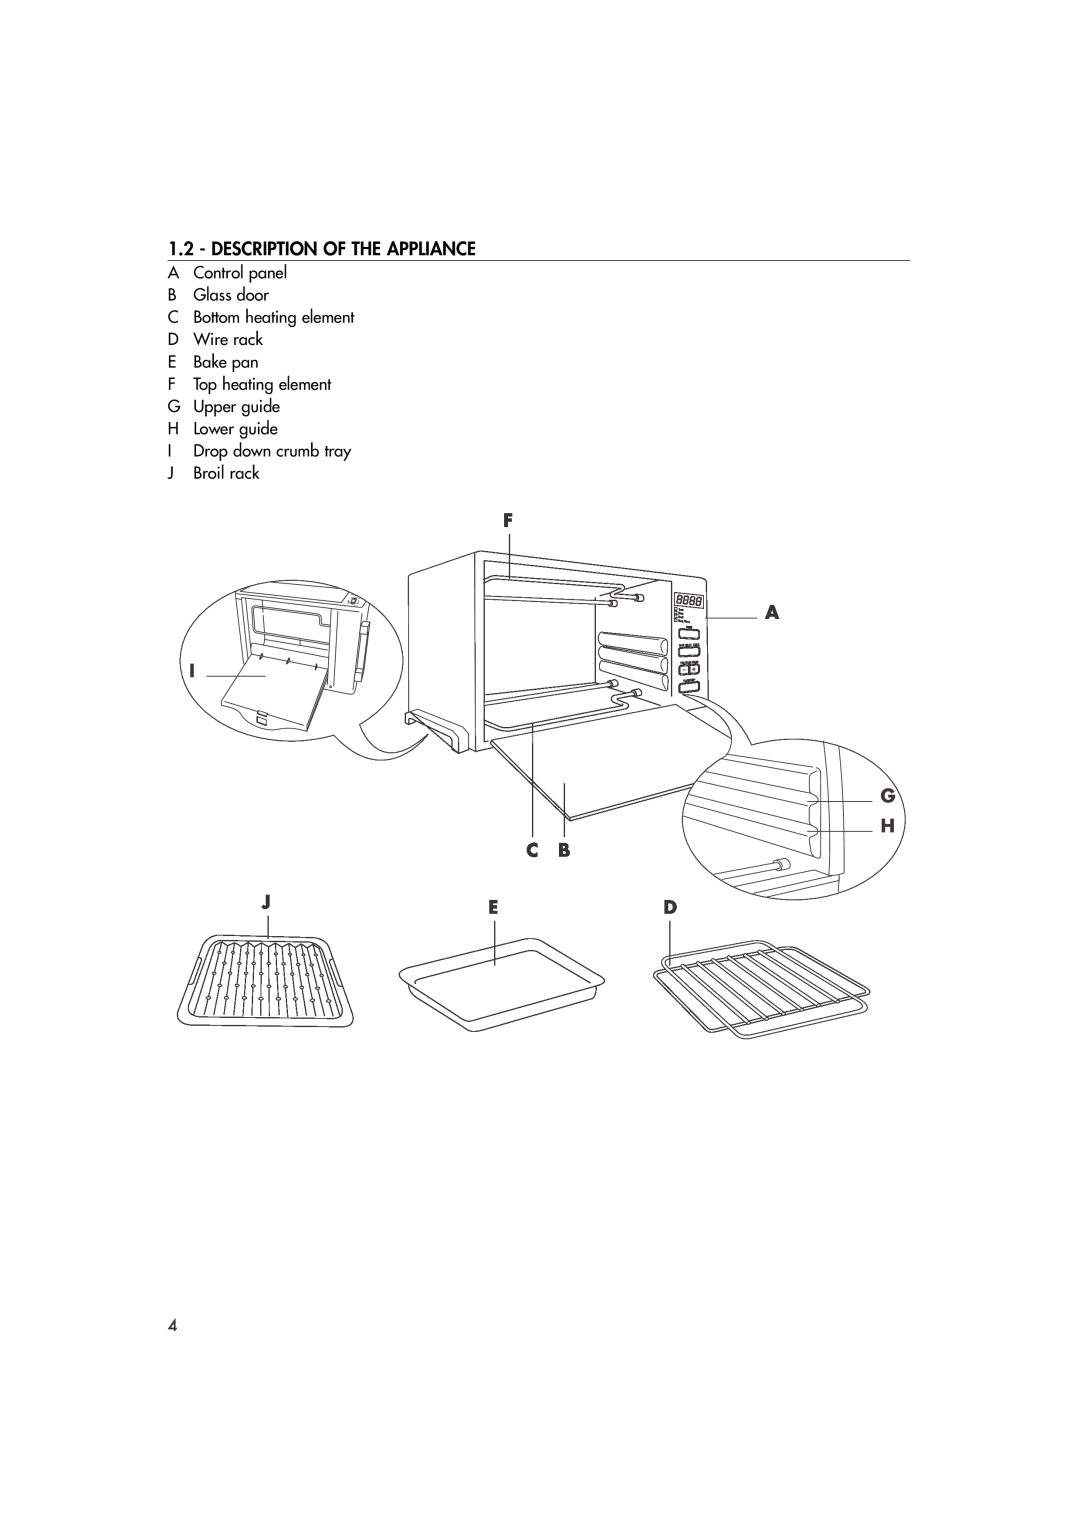 DeLonghi DO400 manual Description Of The Appliance, F A G H C B Ed 